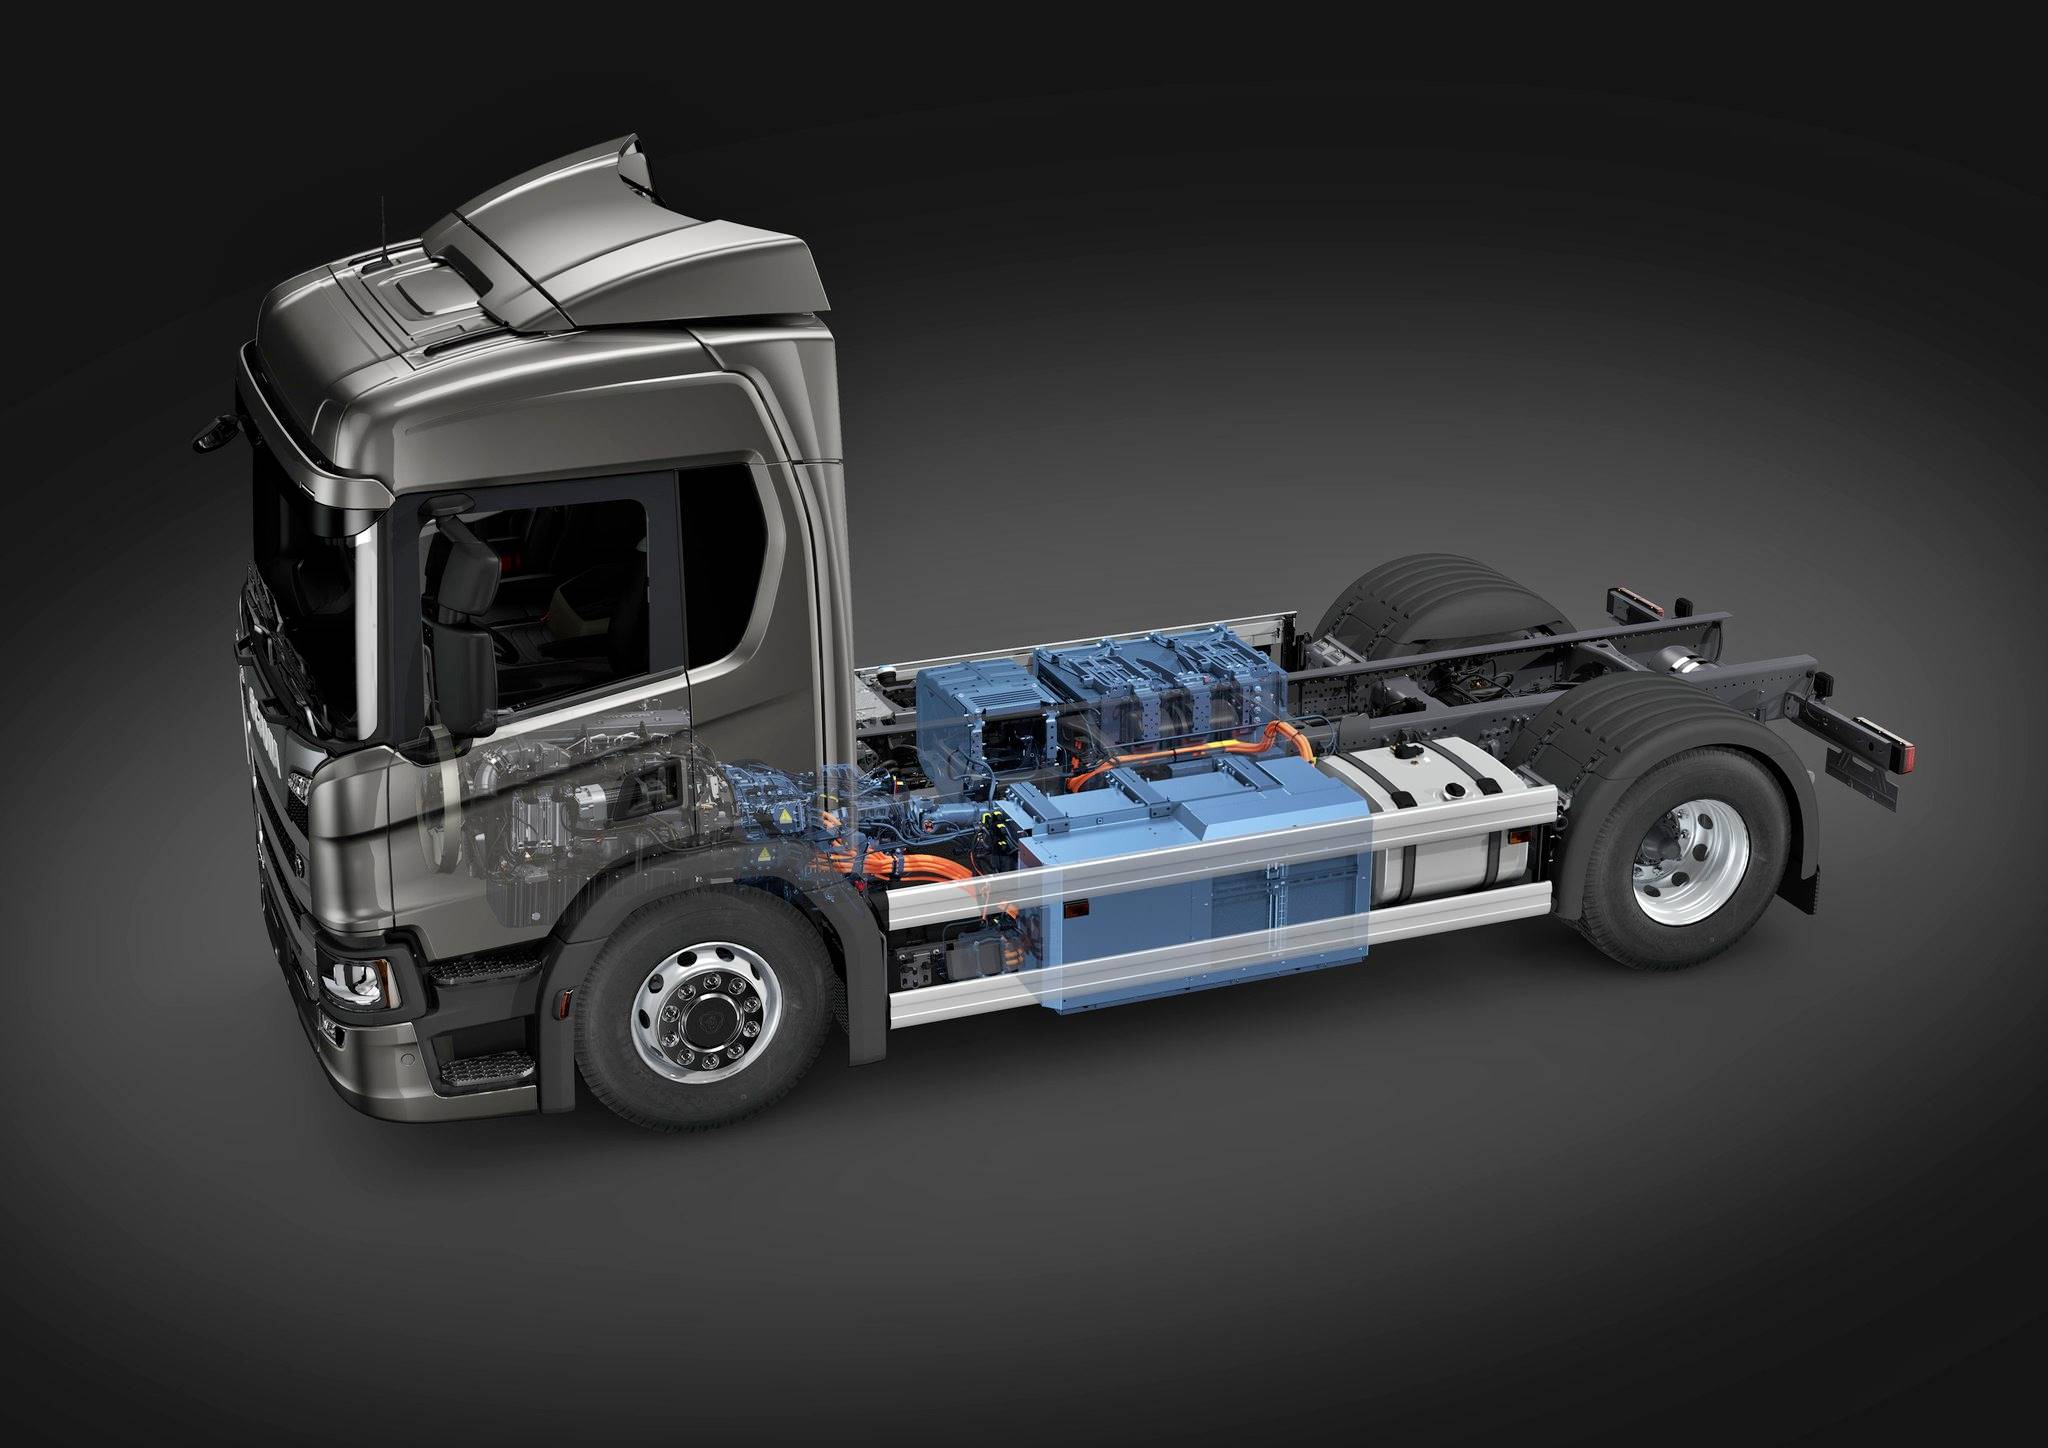 Plug-in hybrid powertrain in the Scania truck.